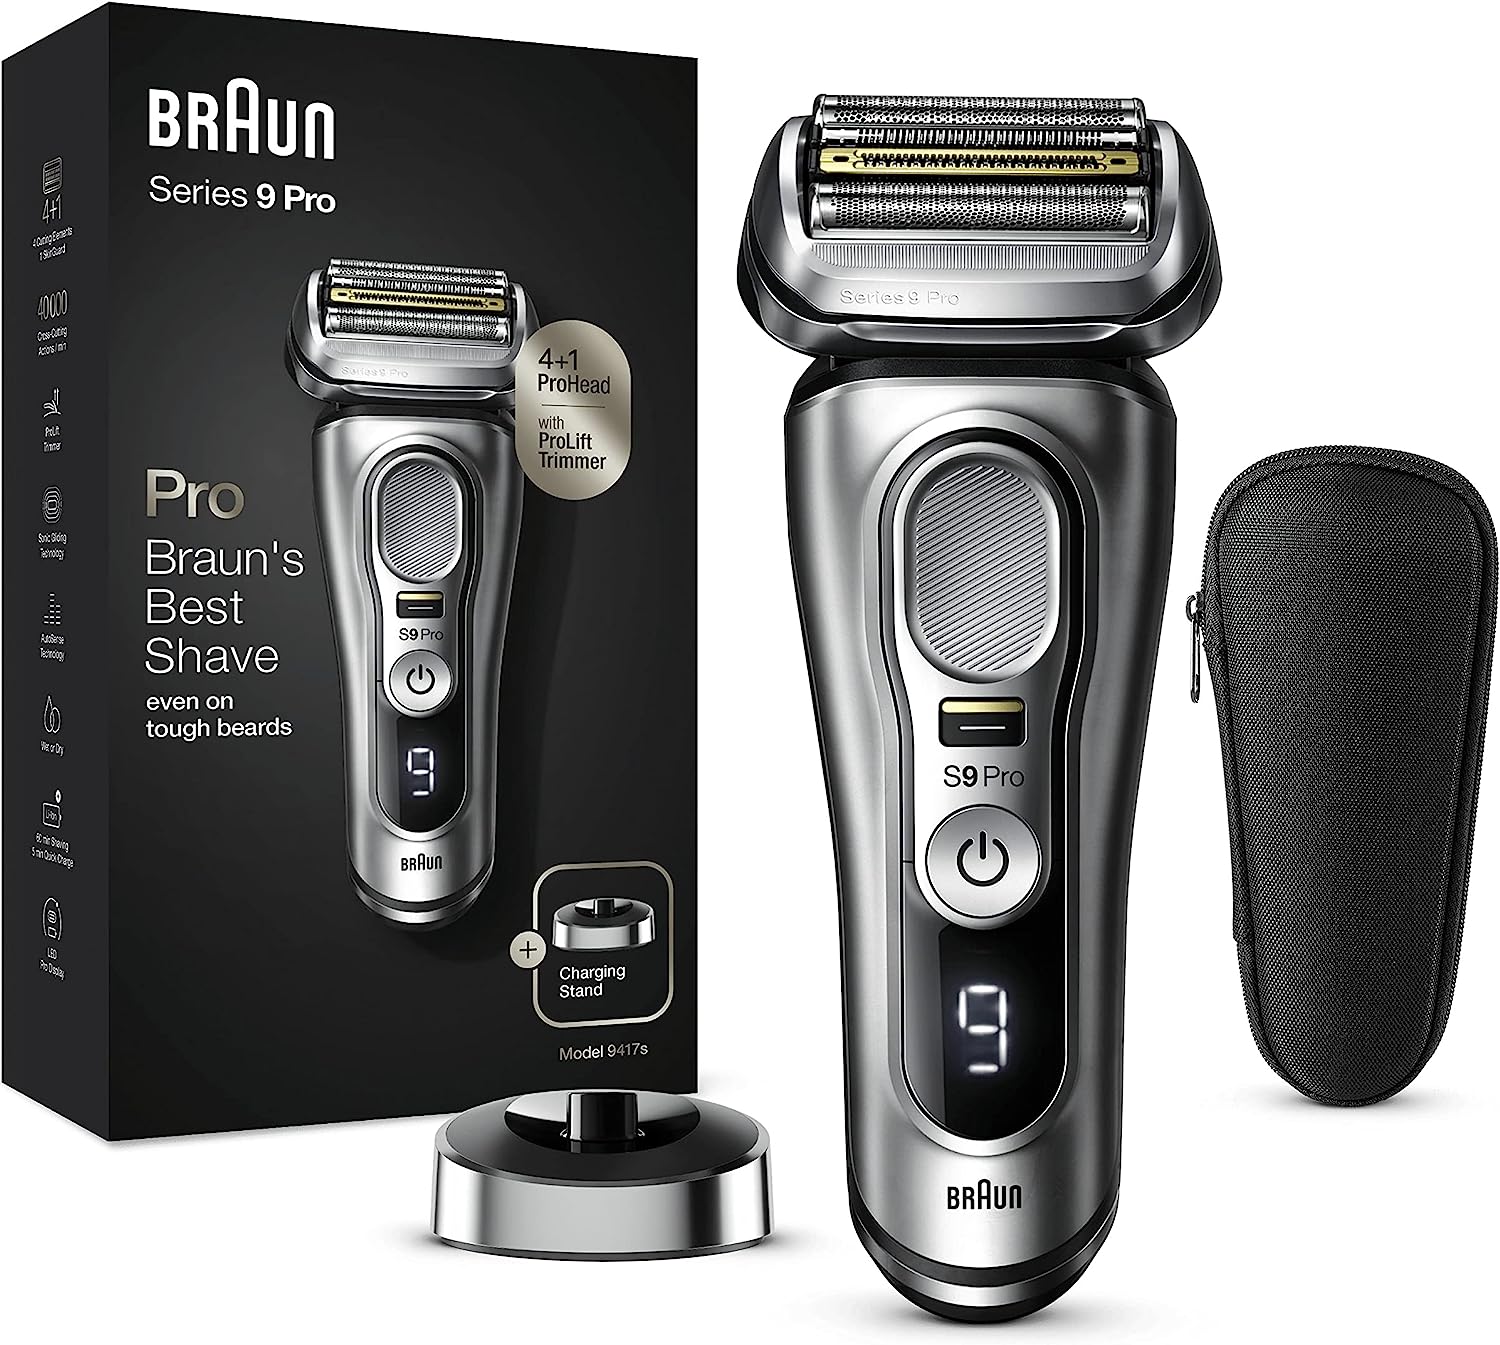 Braun Series 9 Pro versus Braun Series 9 Pro Plus versus Braun Series 9